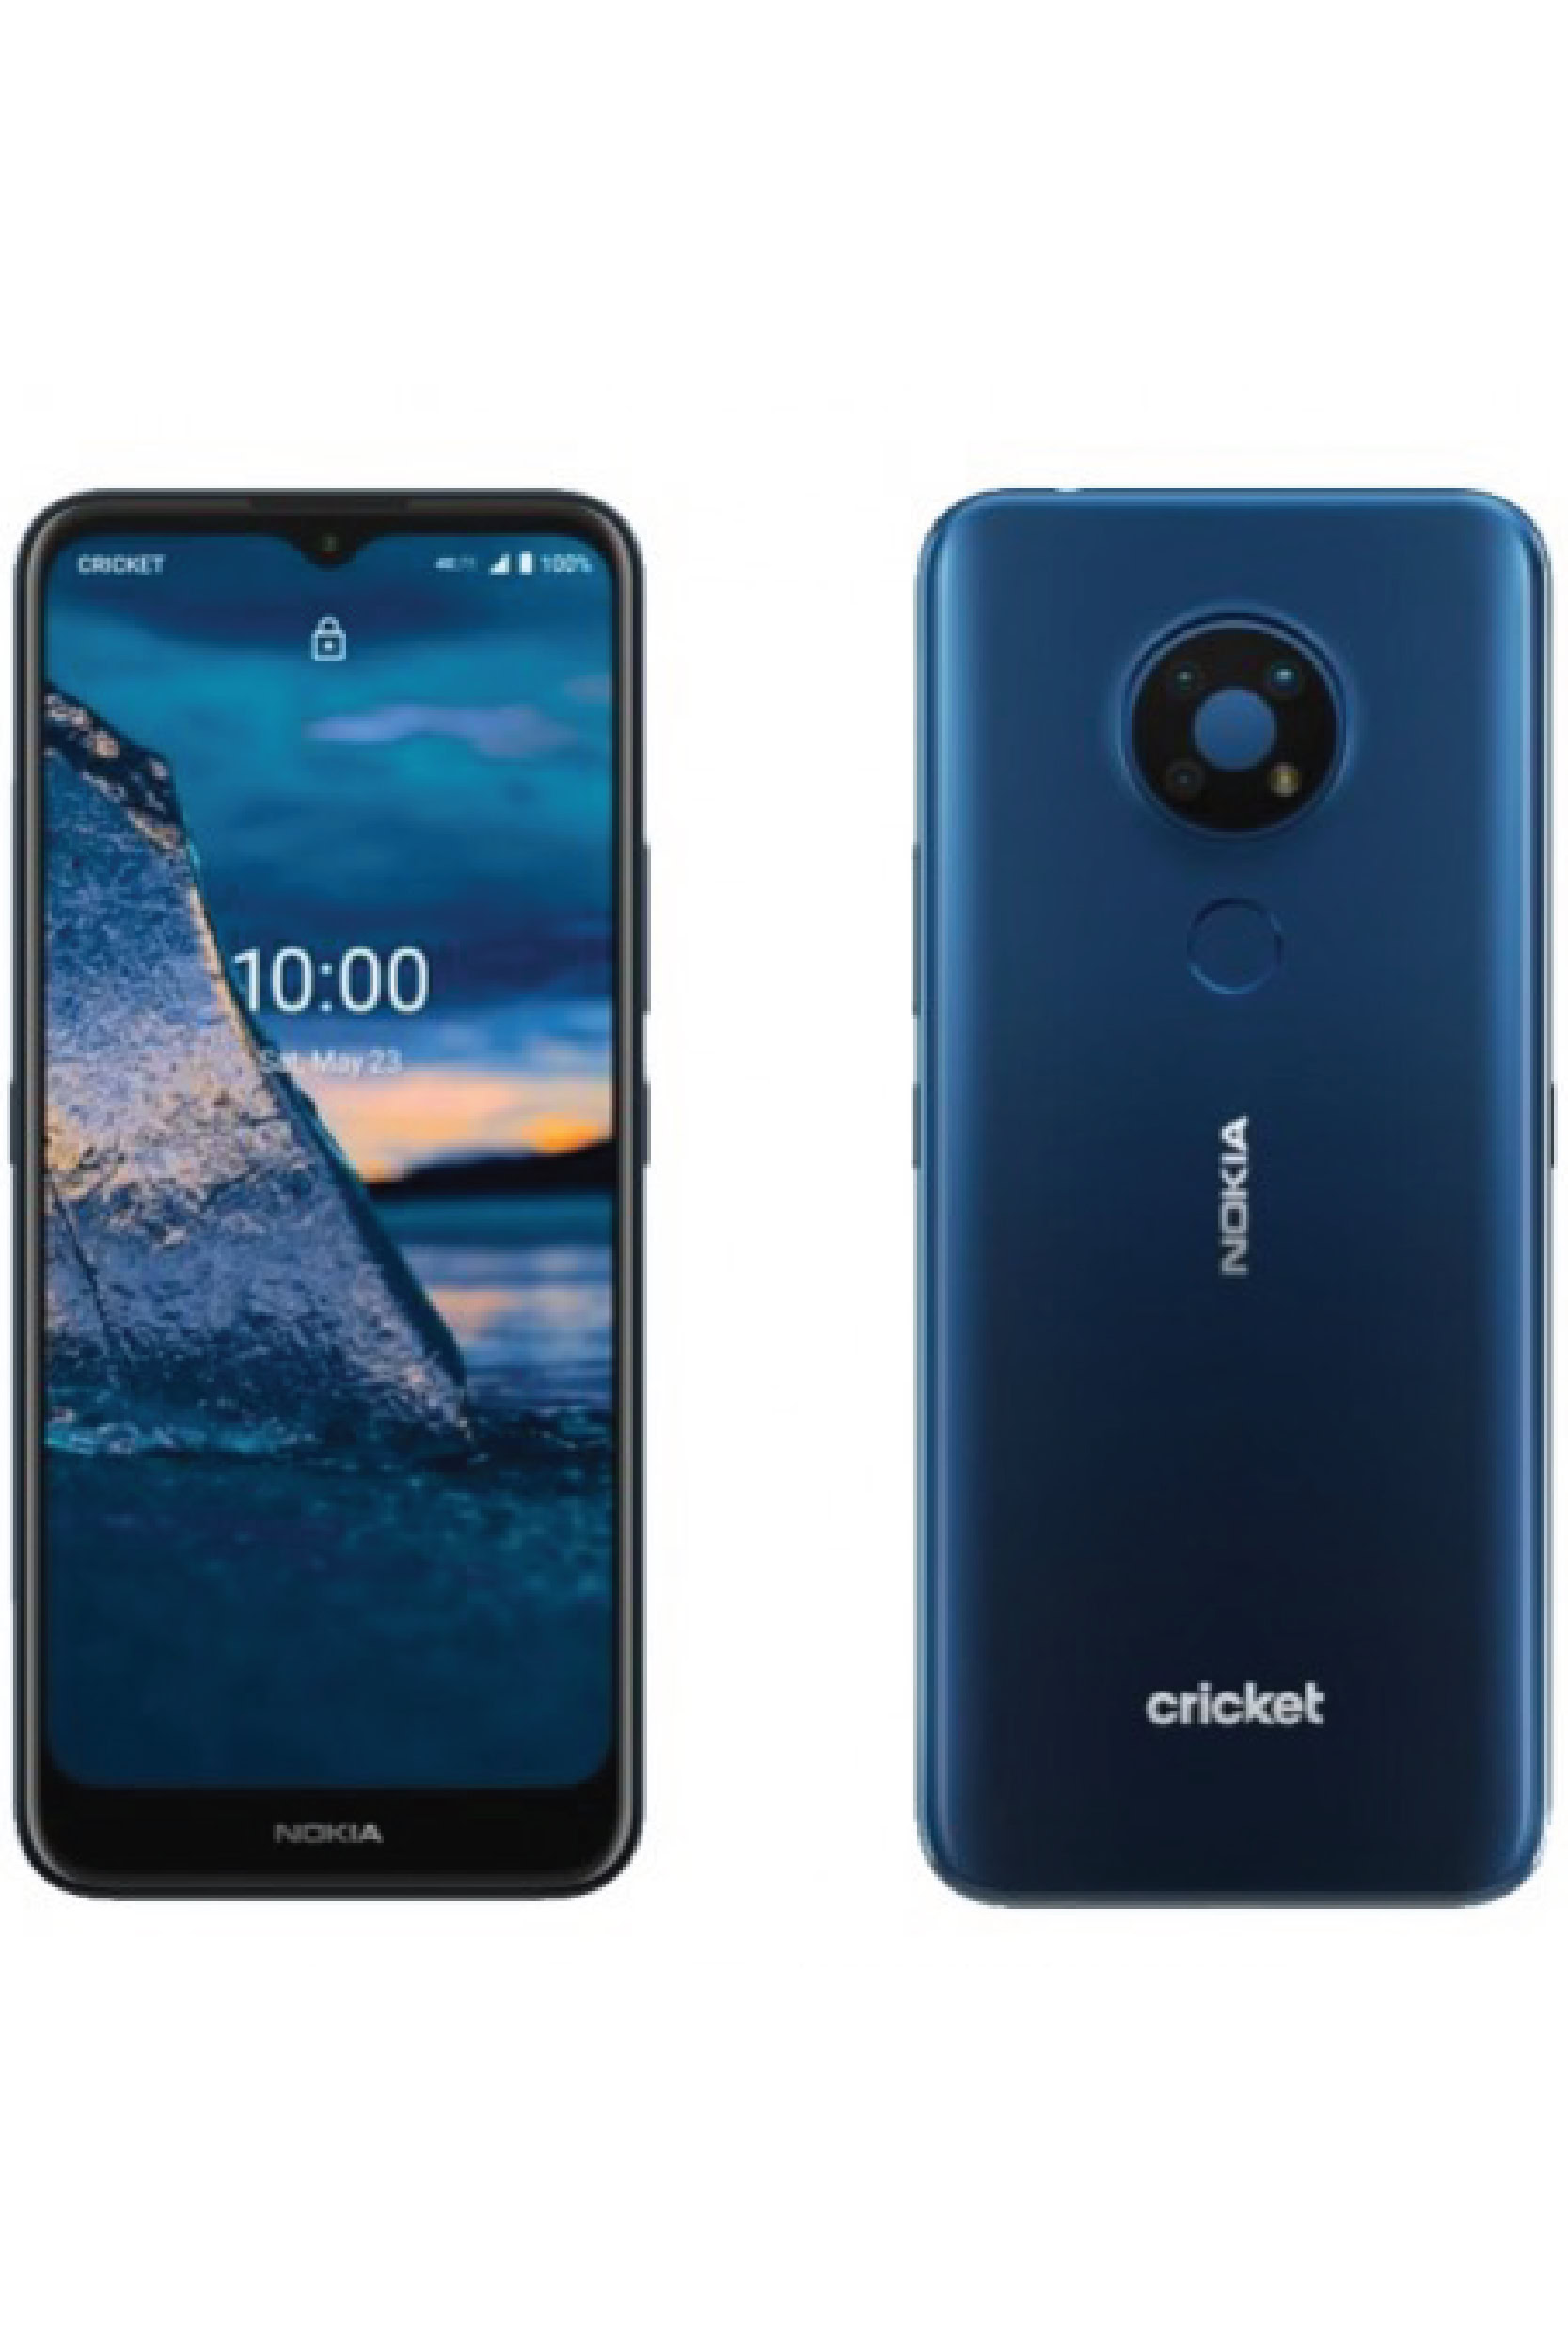 Nokia C5 Endi Price in Pakistan & Specs: Daily Updated